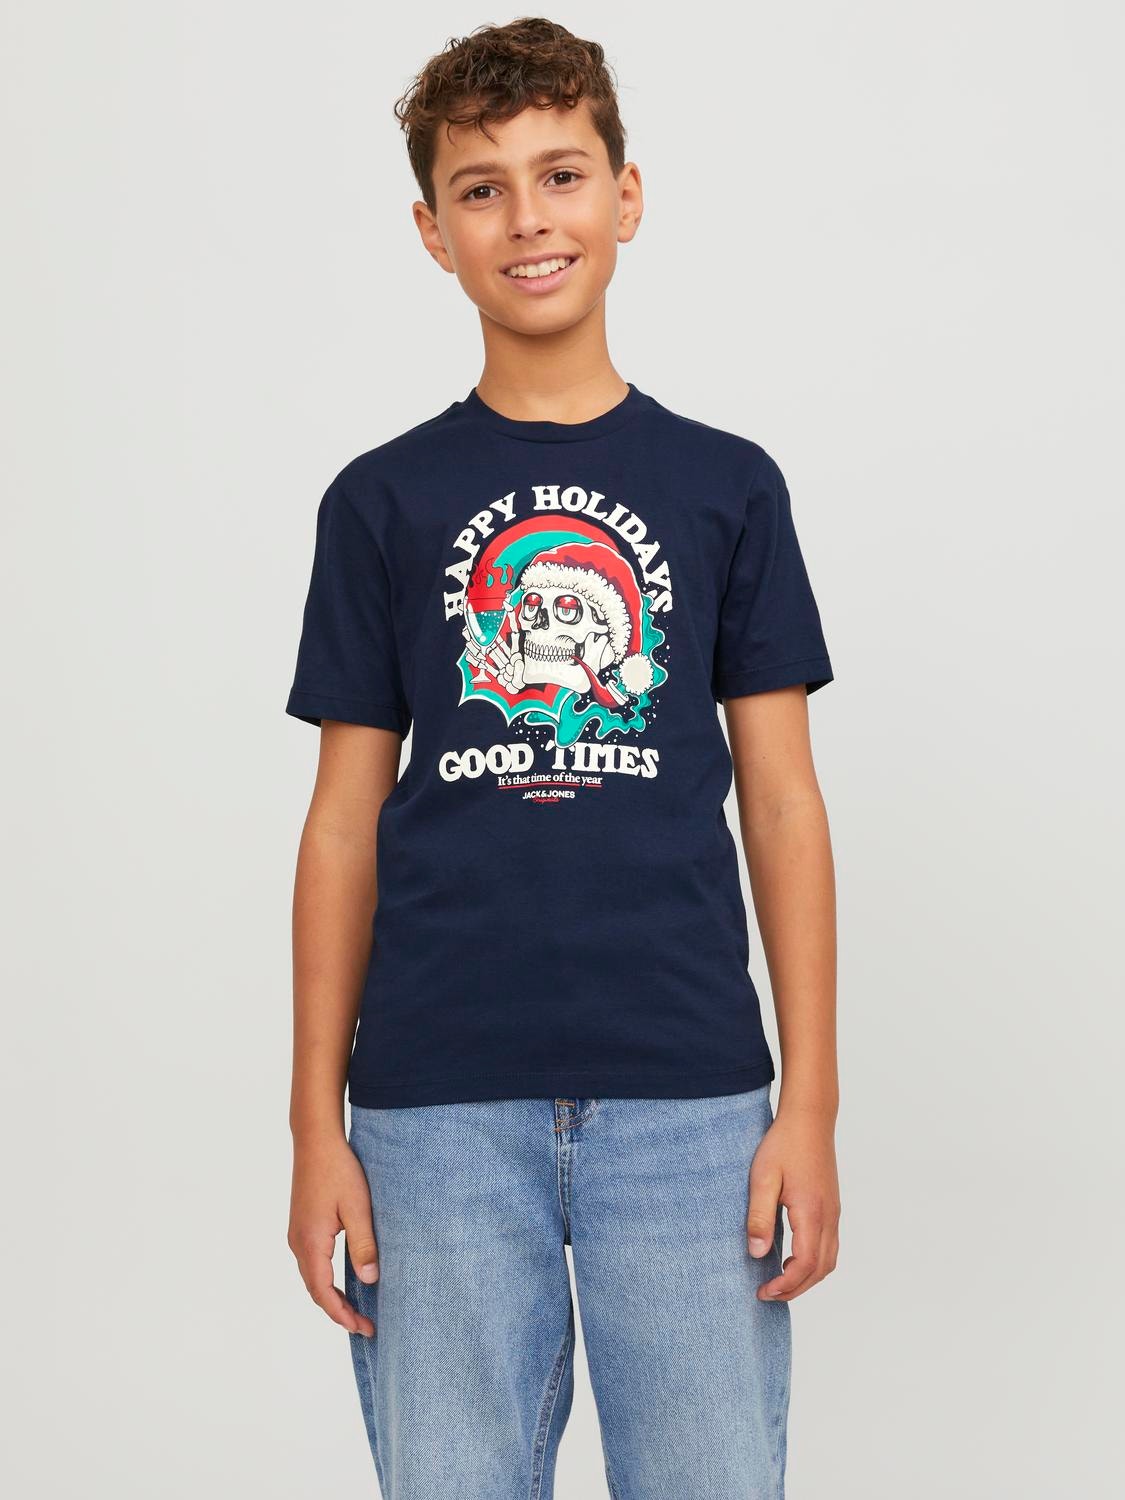 Jack & Jones X-mas T-shirt For boys -Navy Blazer - 12247645